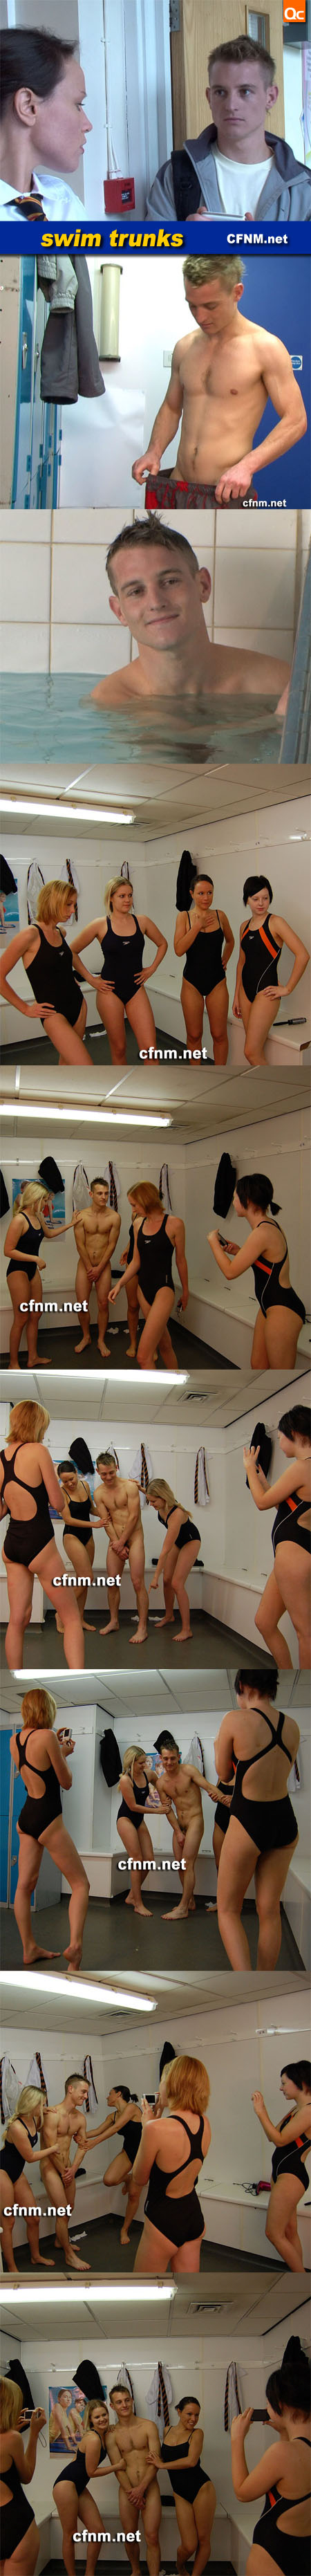 CFNM.net: Swim Trunks